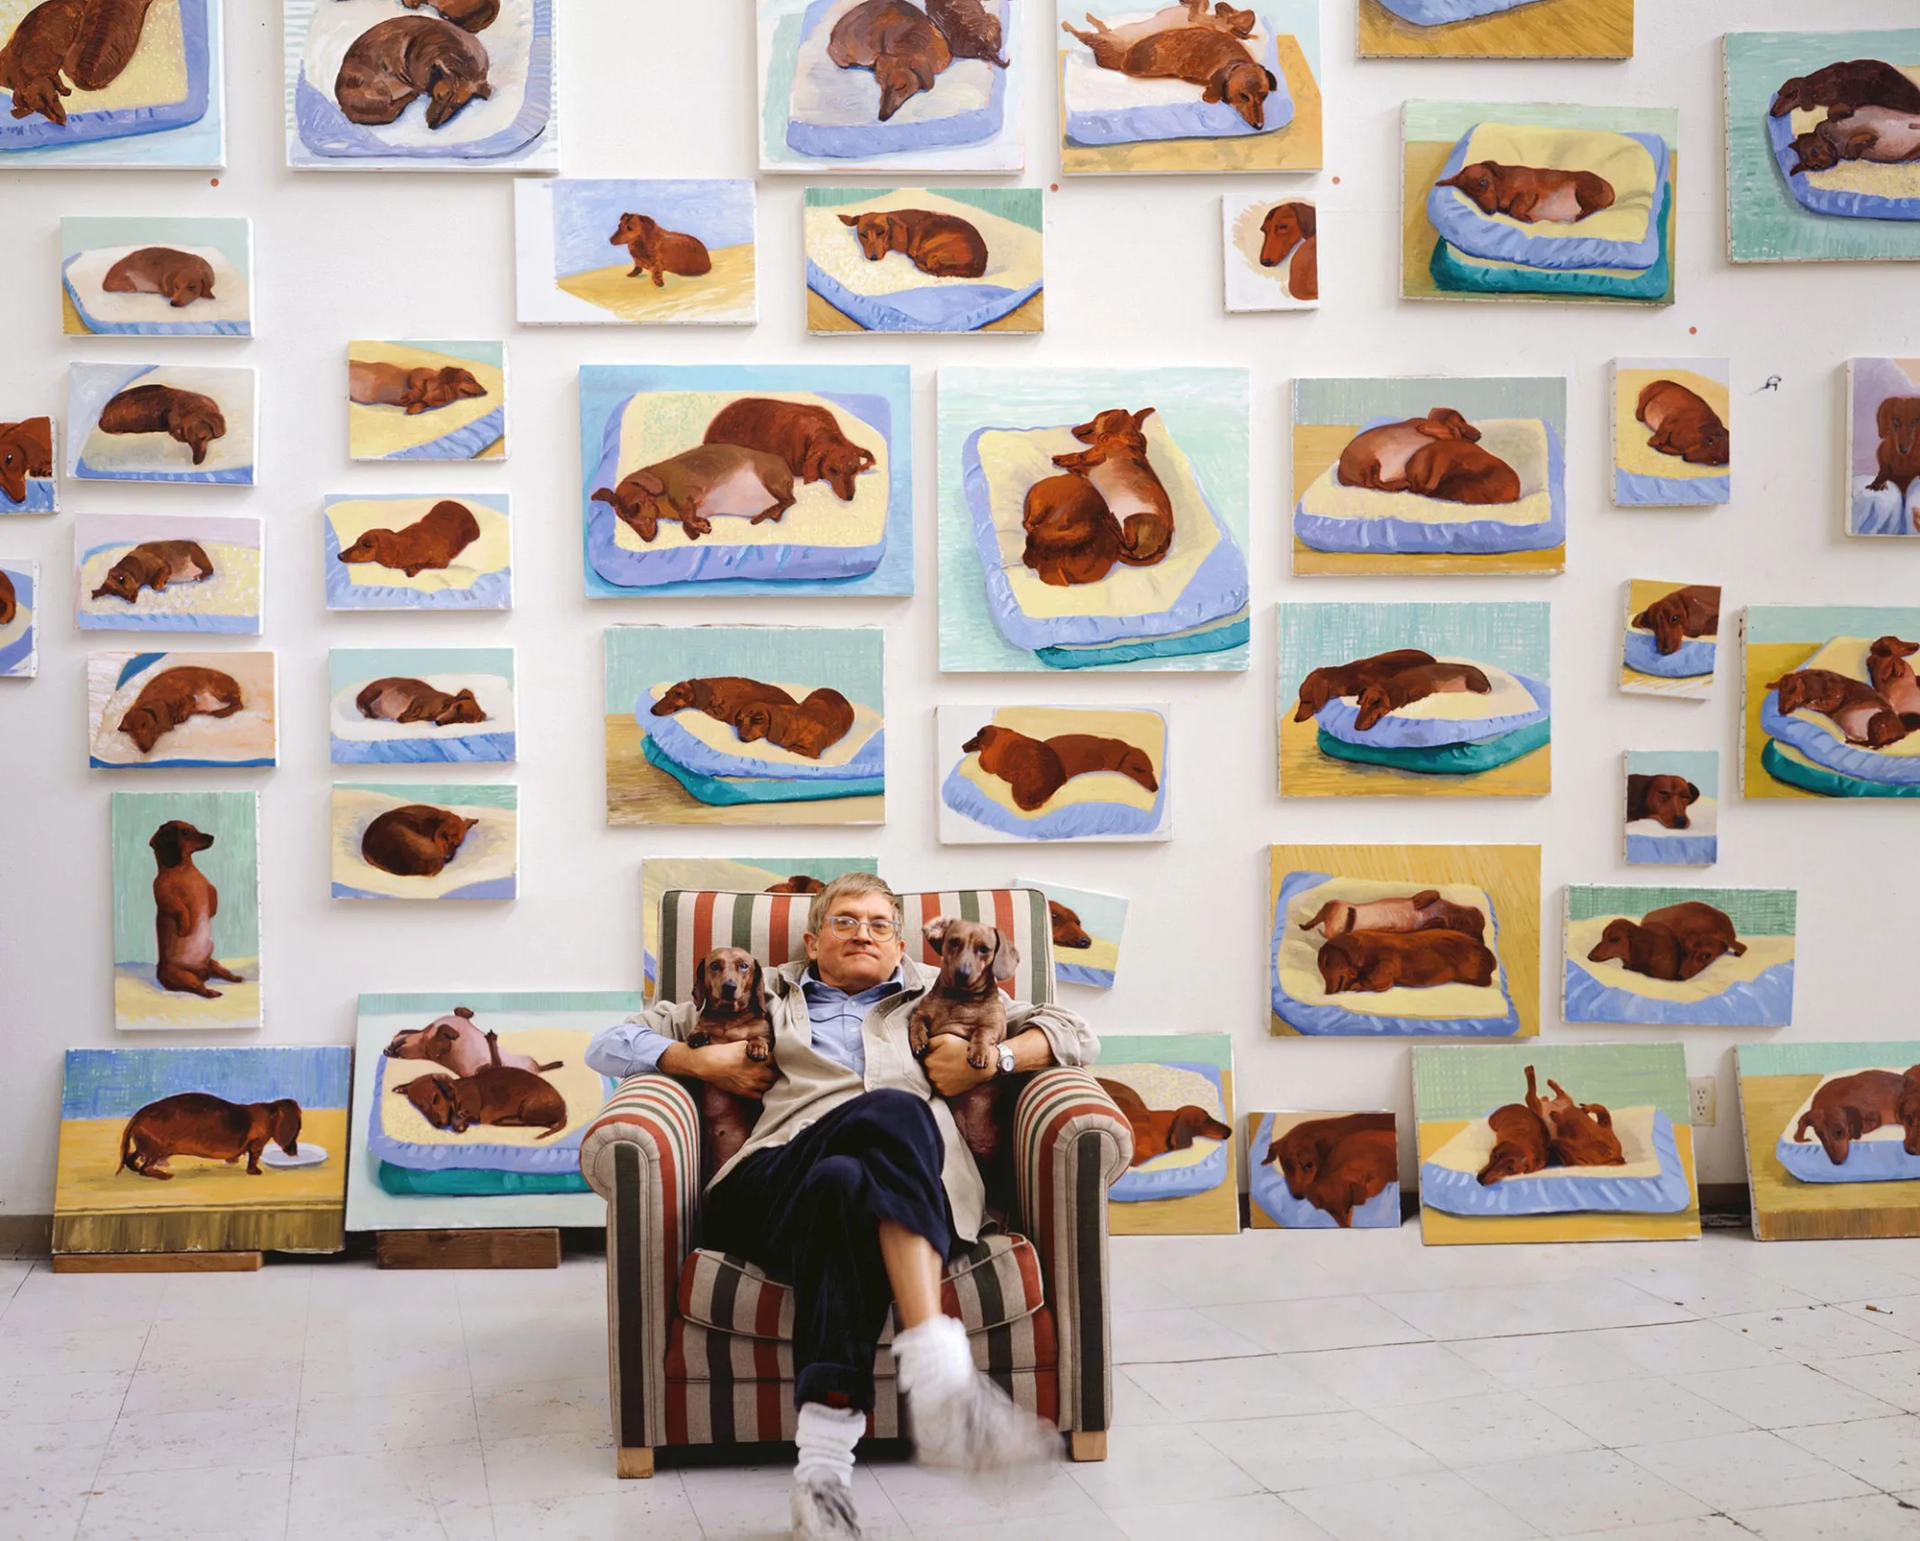 Man’s Best Friend: David Hockney's Love for Dachshunds